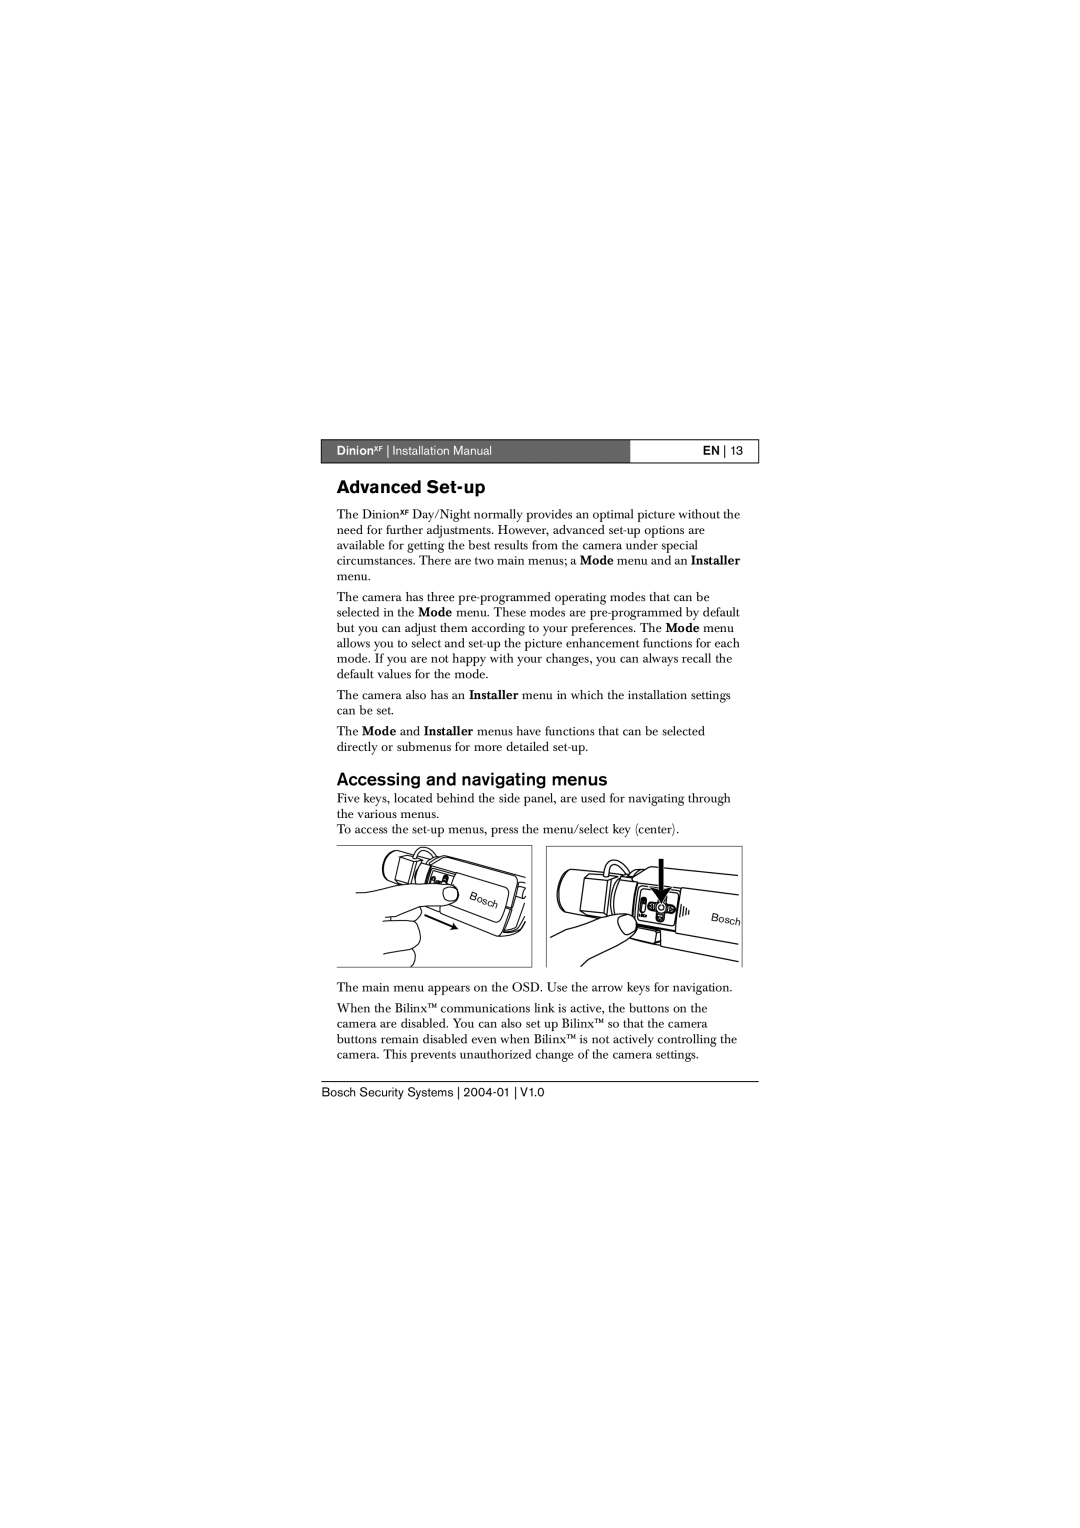 Bosch Appliances LTC 0620, LTC 0495 Advanced Set-up, Accessing and navigating menus, DinionXF Installation Manual 